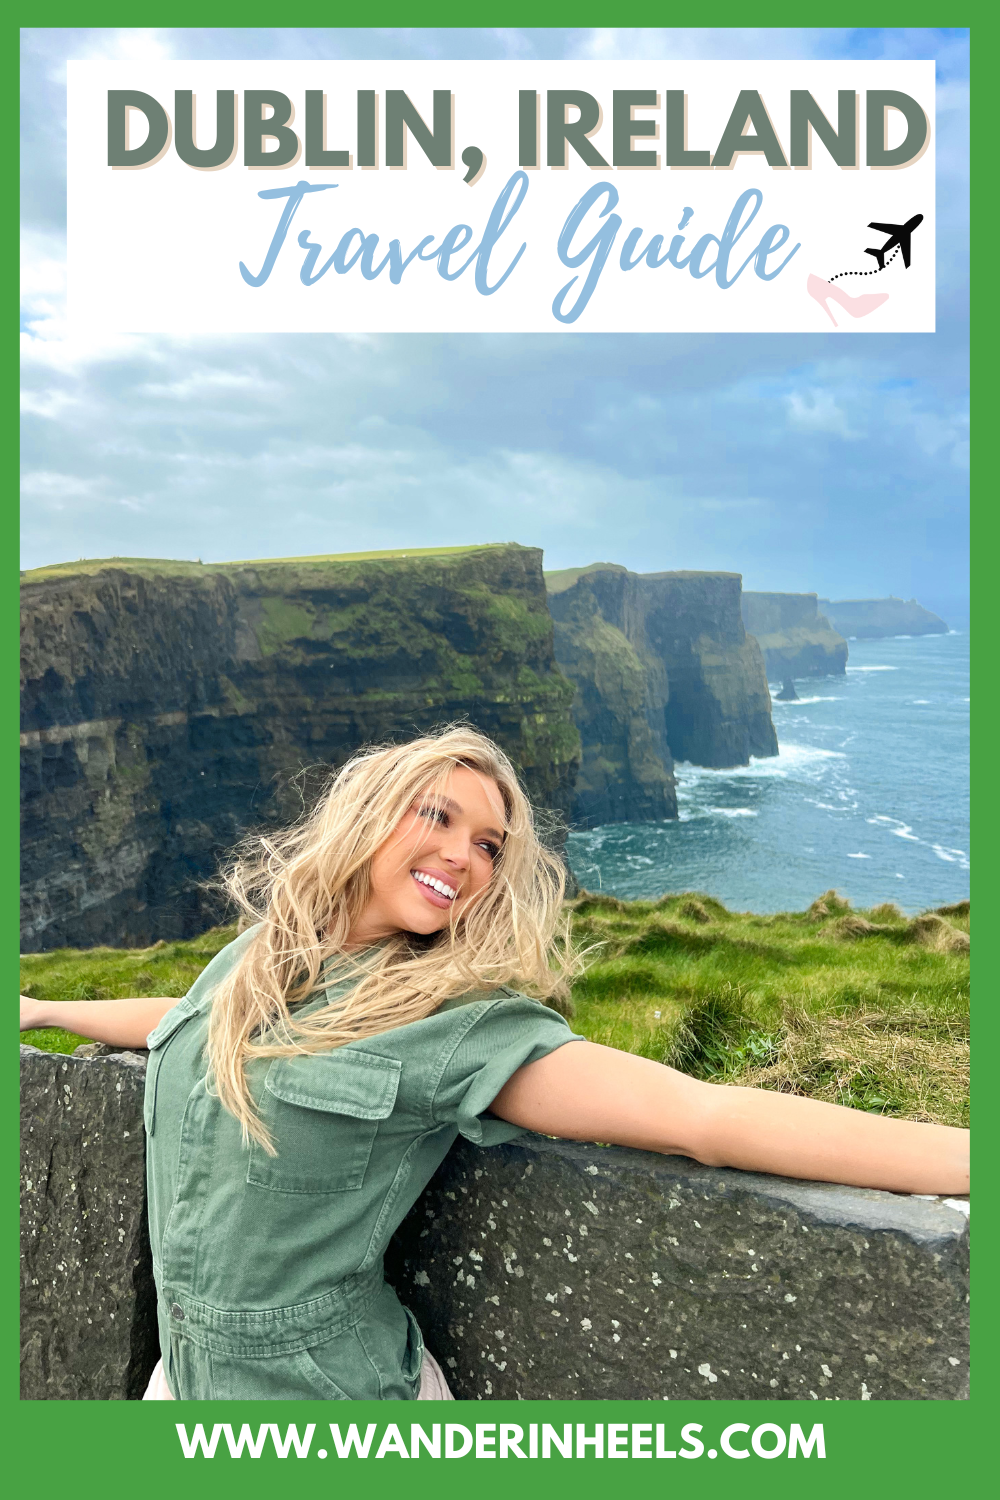 DUBLIN Ireland travel guide